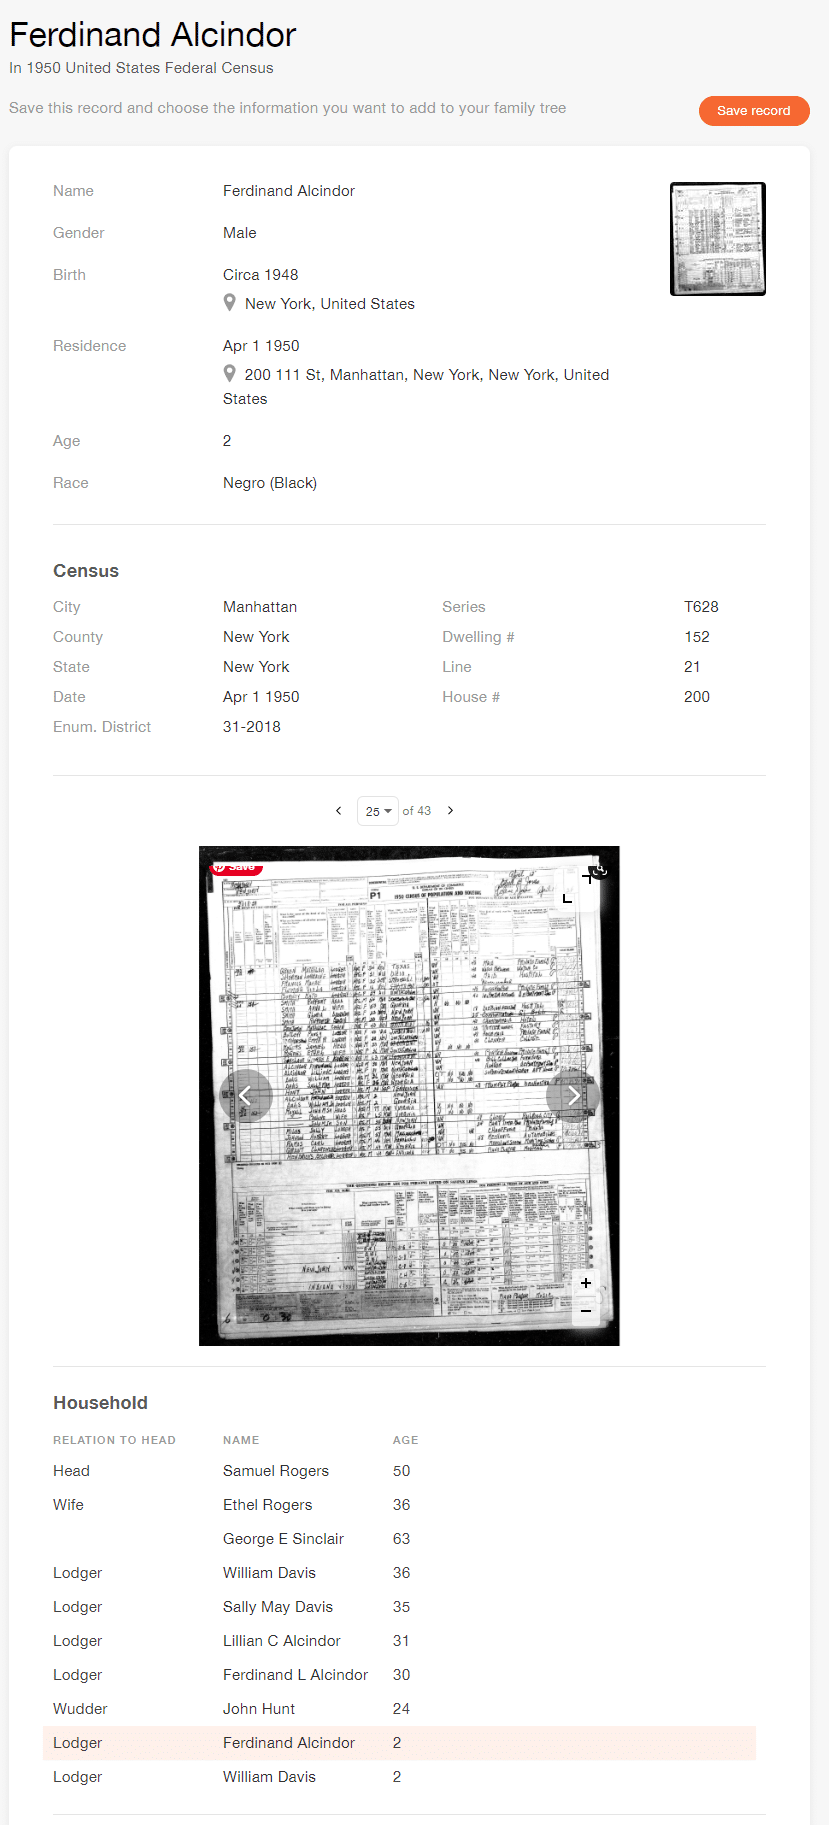 Census Record of Kareem Abdul-Jabbar [Credit: MyHeritage 1950 United States Federal Census]